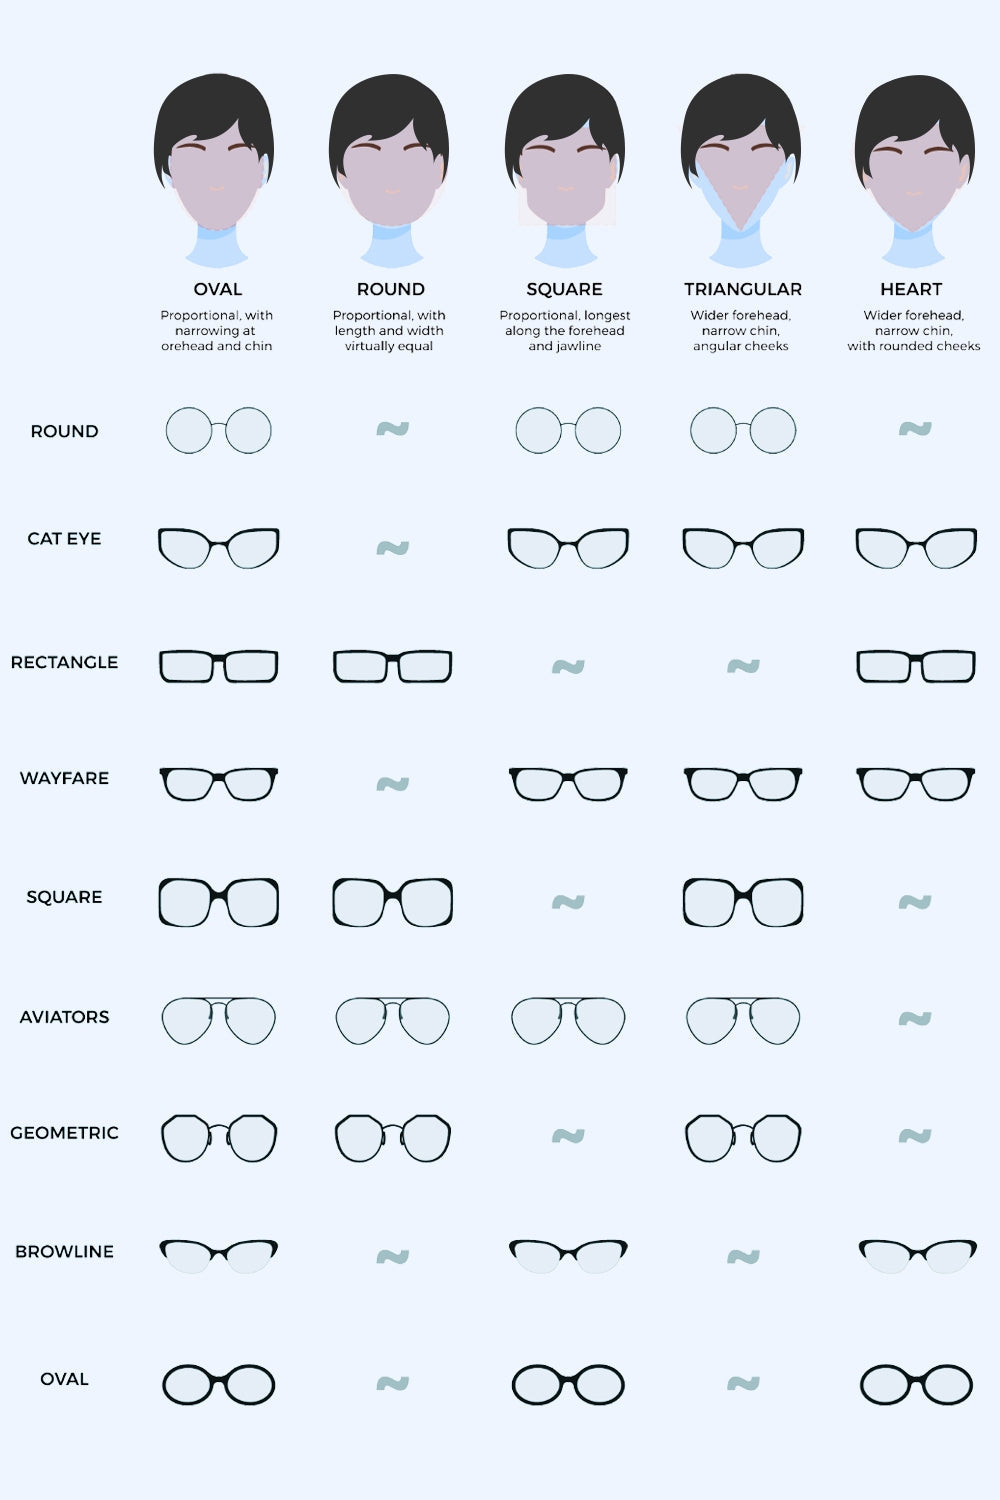 Tortoiseshell Polycarbonate Frame Full Rim Sunglasses Light Gray One Size Sunglasses by Vim&Vigor | Vim&Vigor Boutique